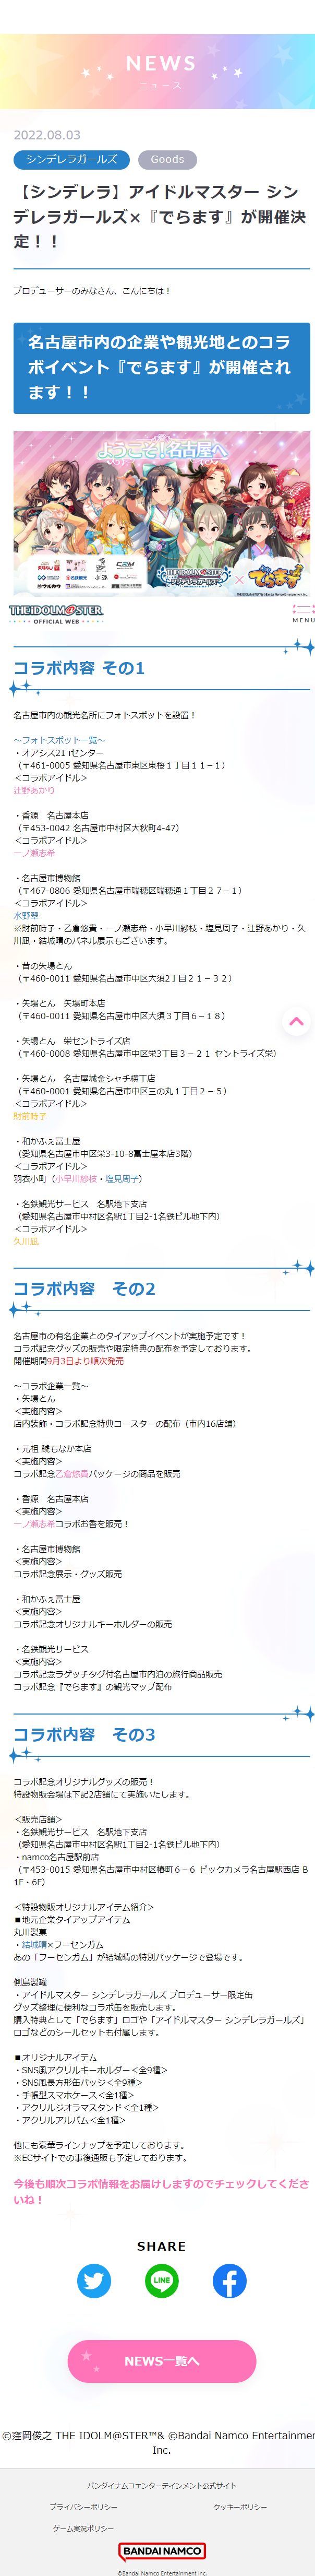 idolmaster-official.jp_news_01_4534.html (1)